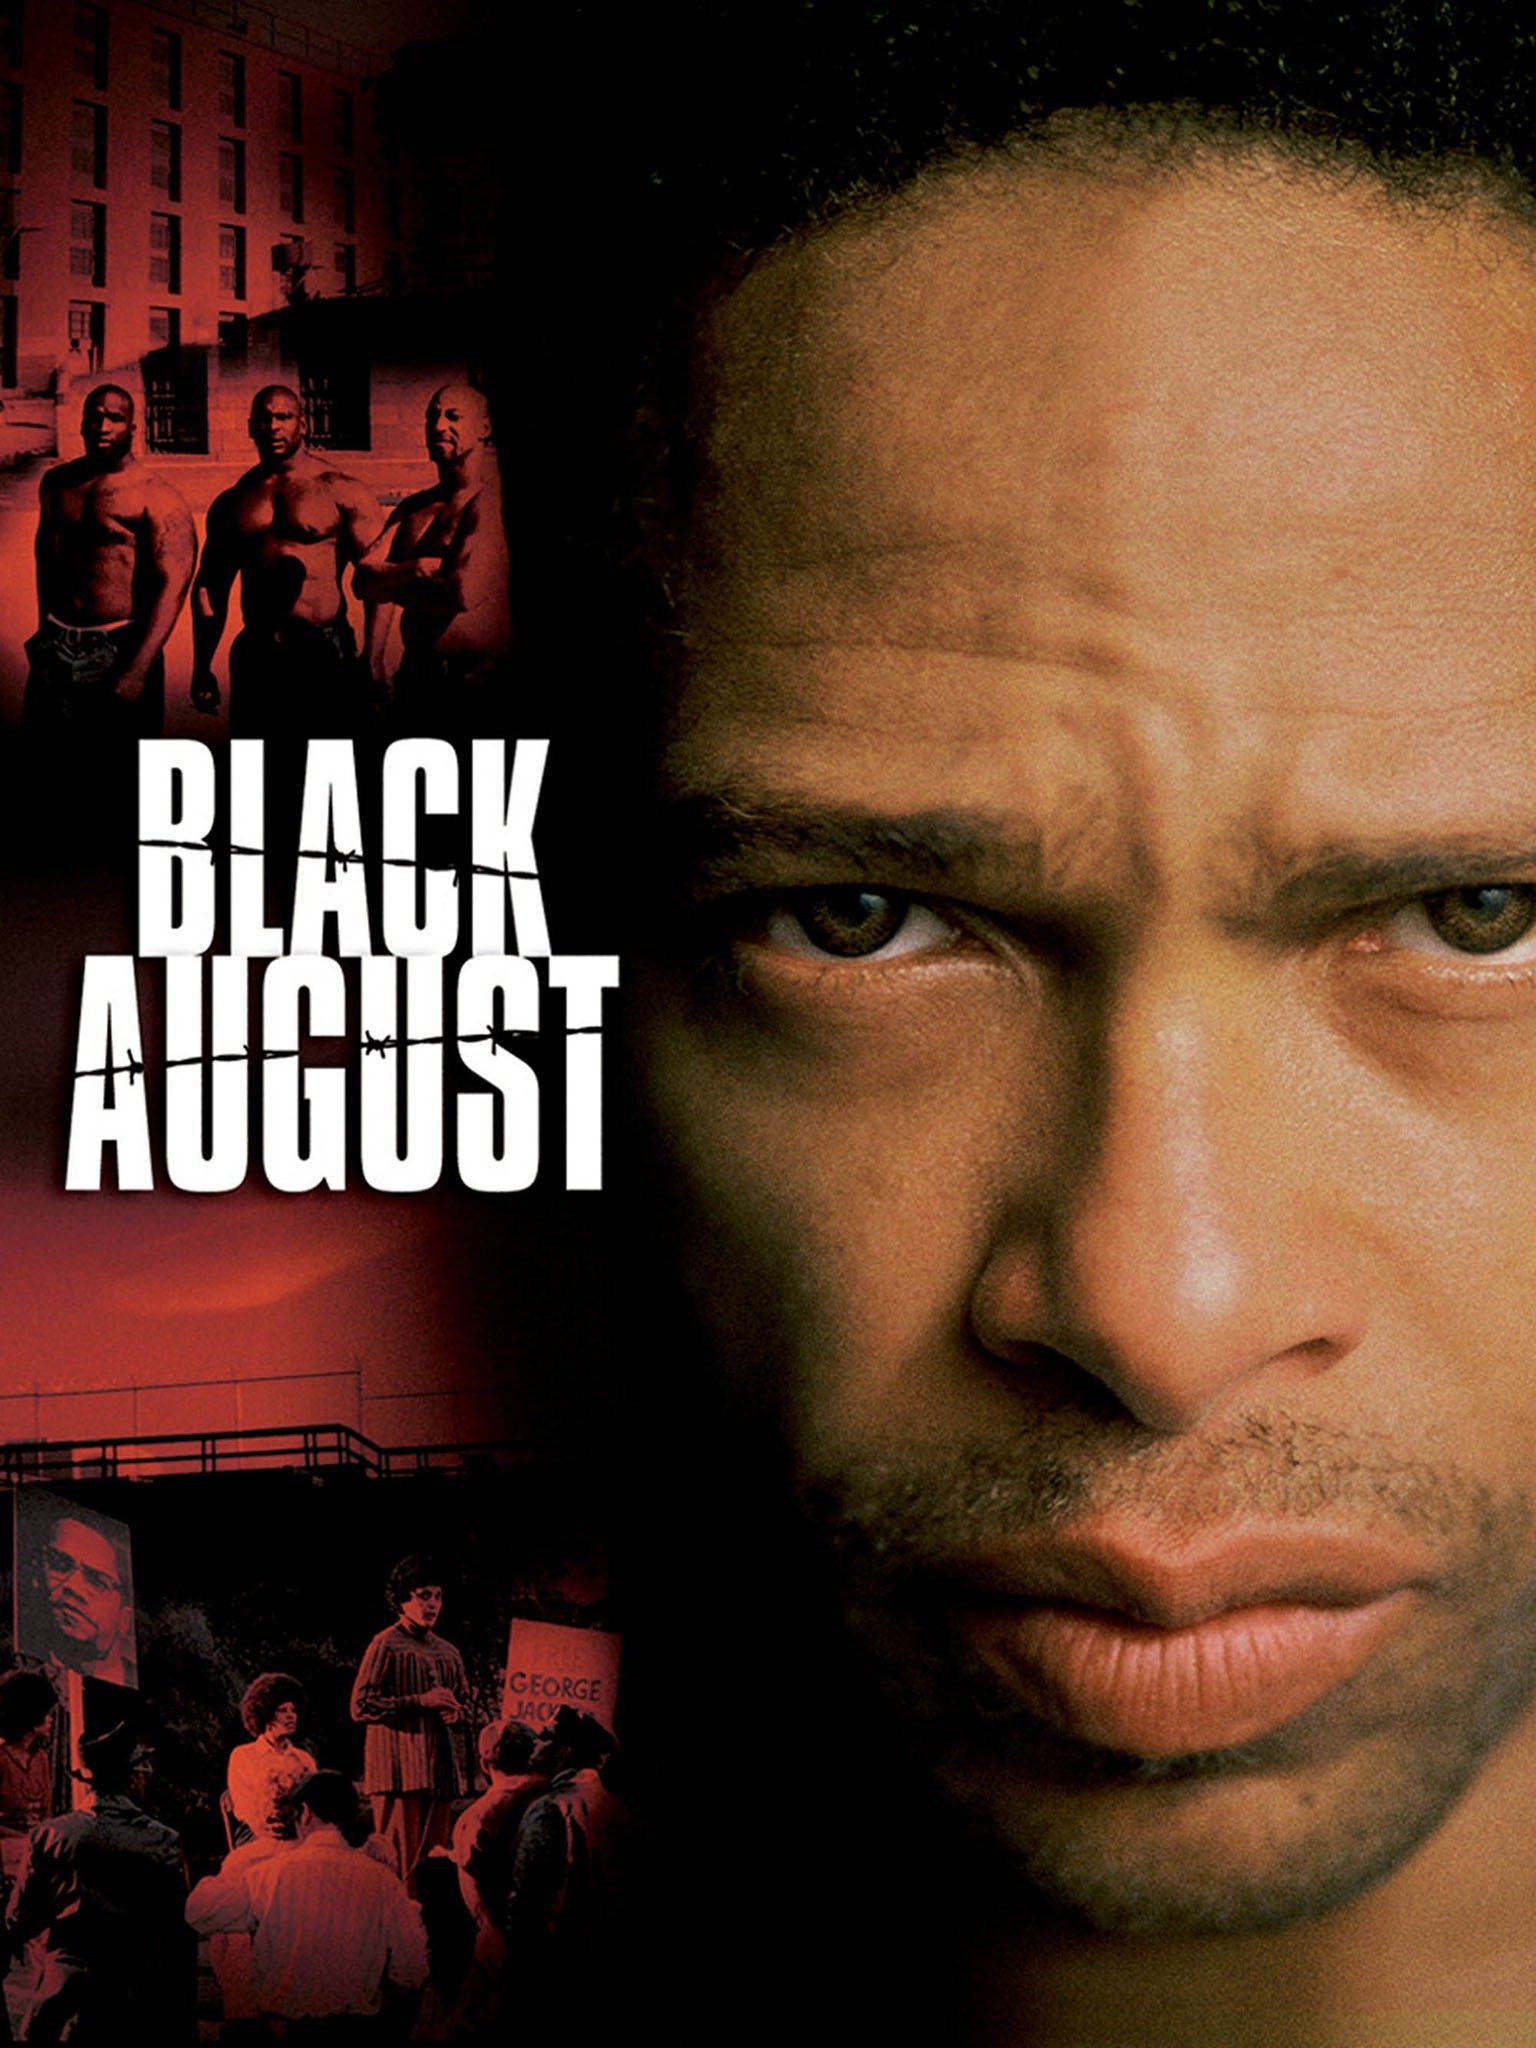 Black August Movie Reviews